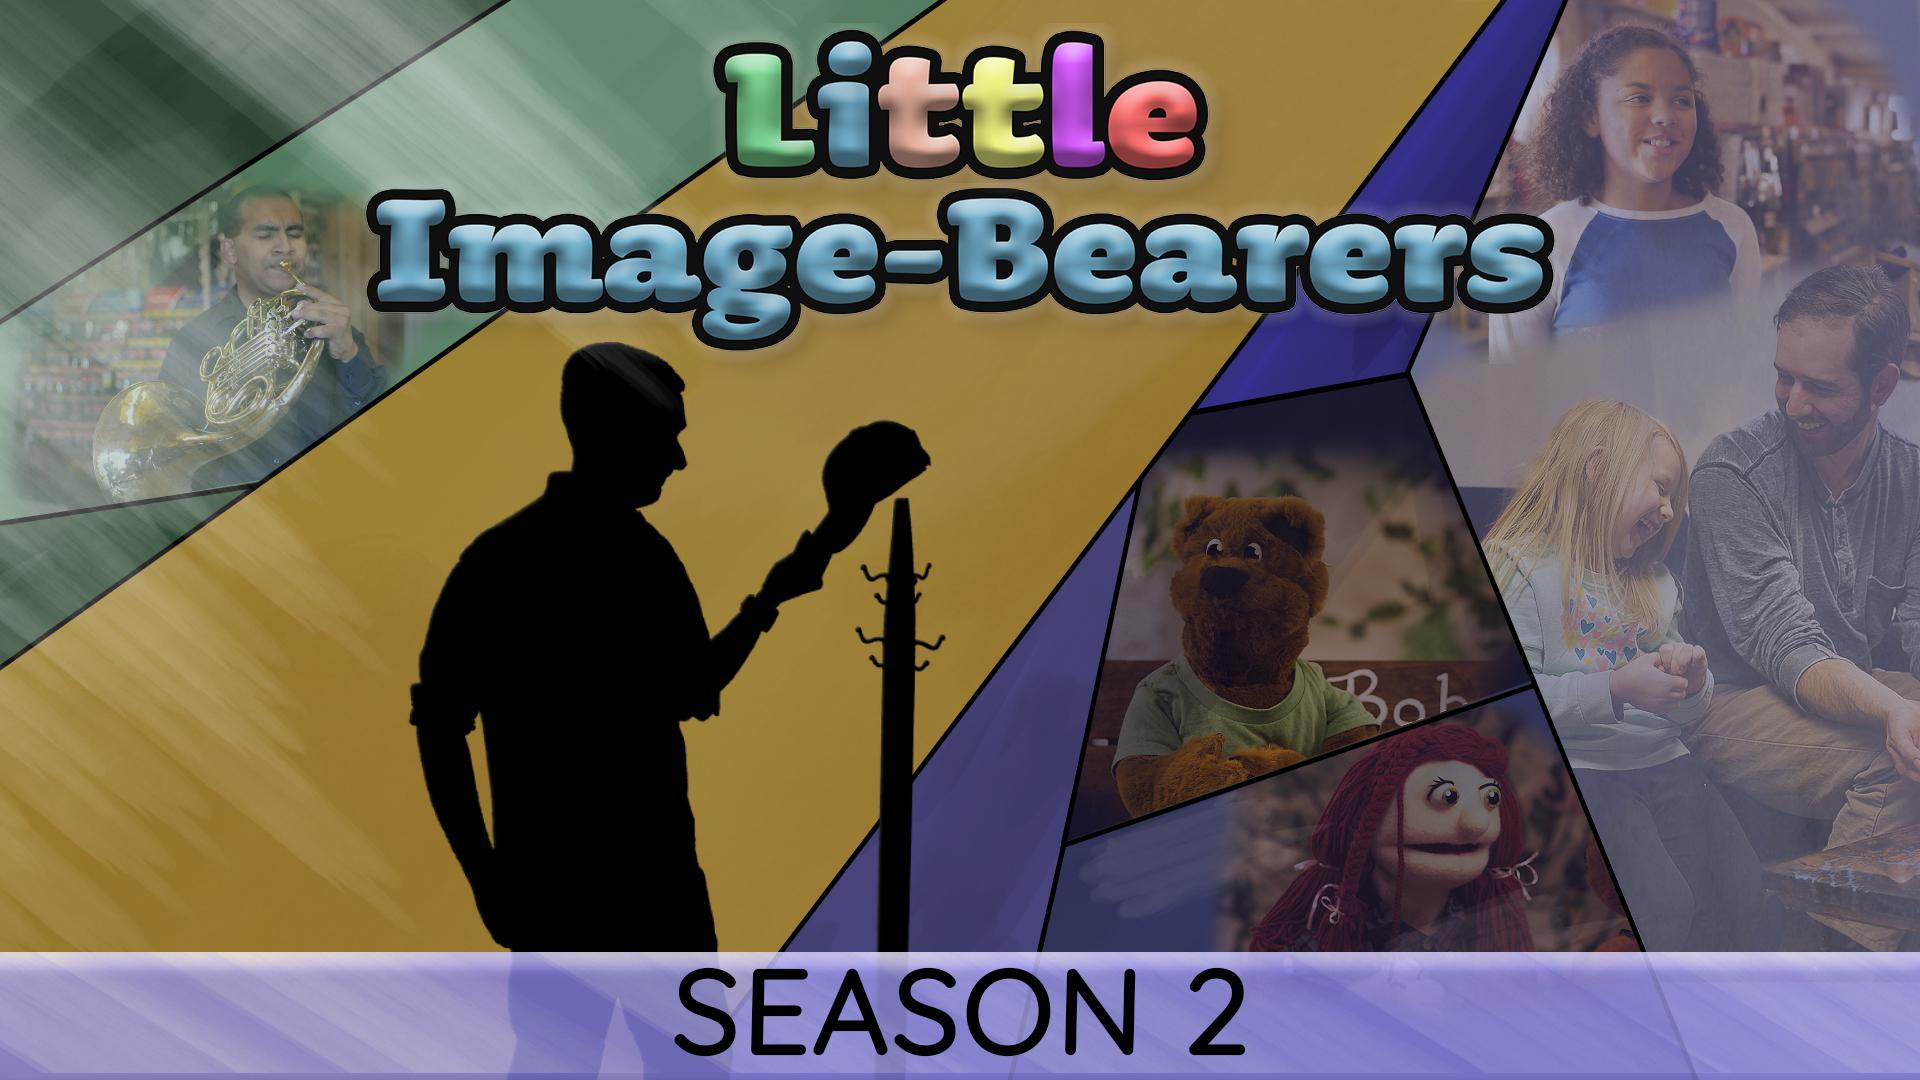 Little Image-Bearers | Jesus: The Savior